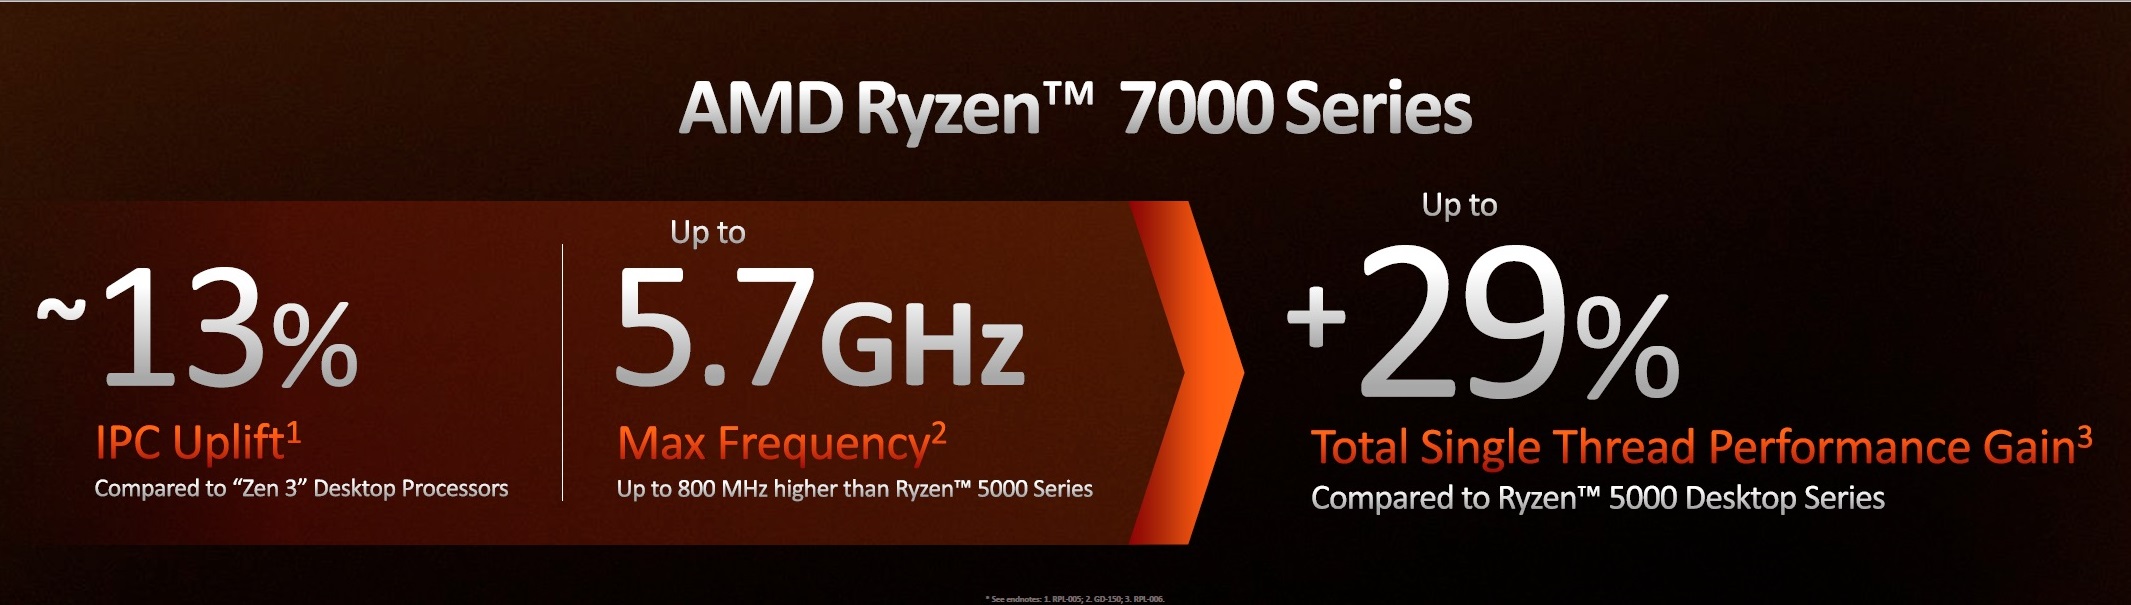 AMD Ryzen 7000 Zen 4 Desktop CPU Official  4 - رونمایی رسمی از پردازنده های Ryzen 7000 شرکت AMD